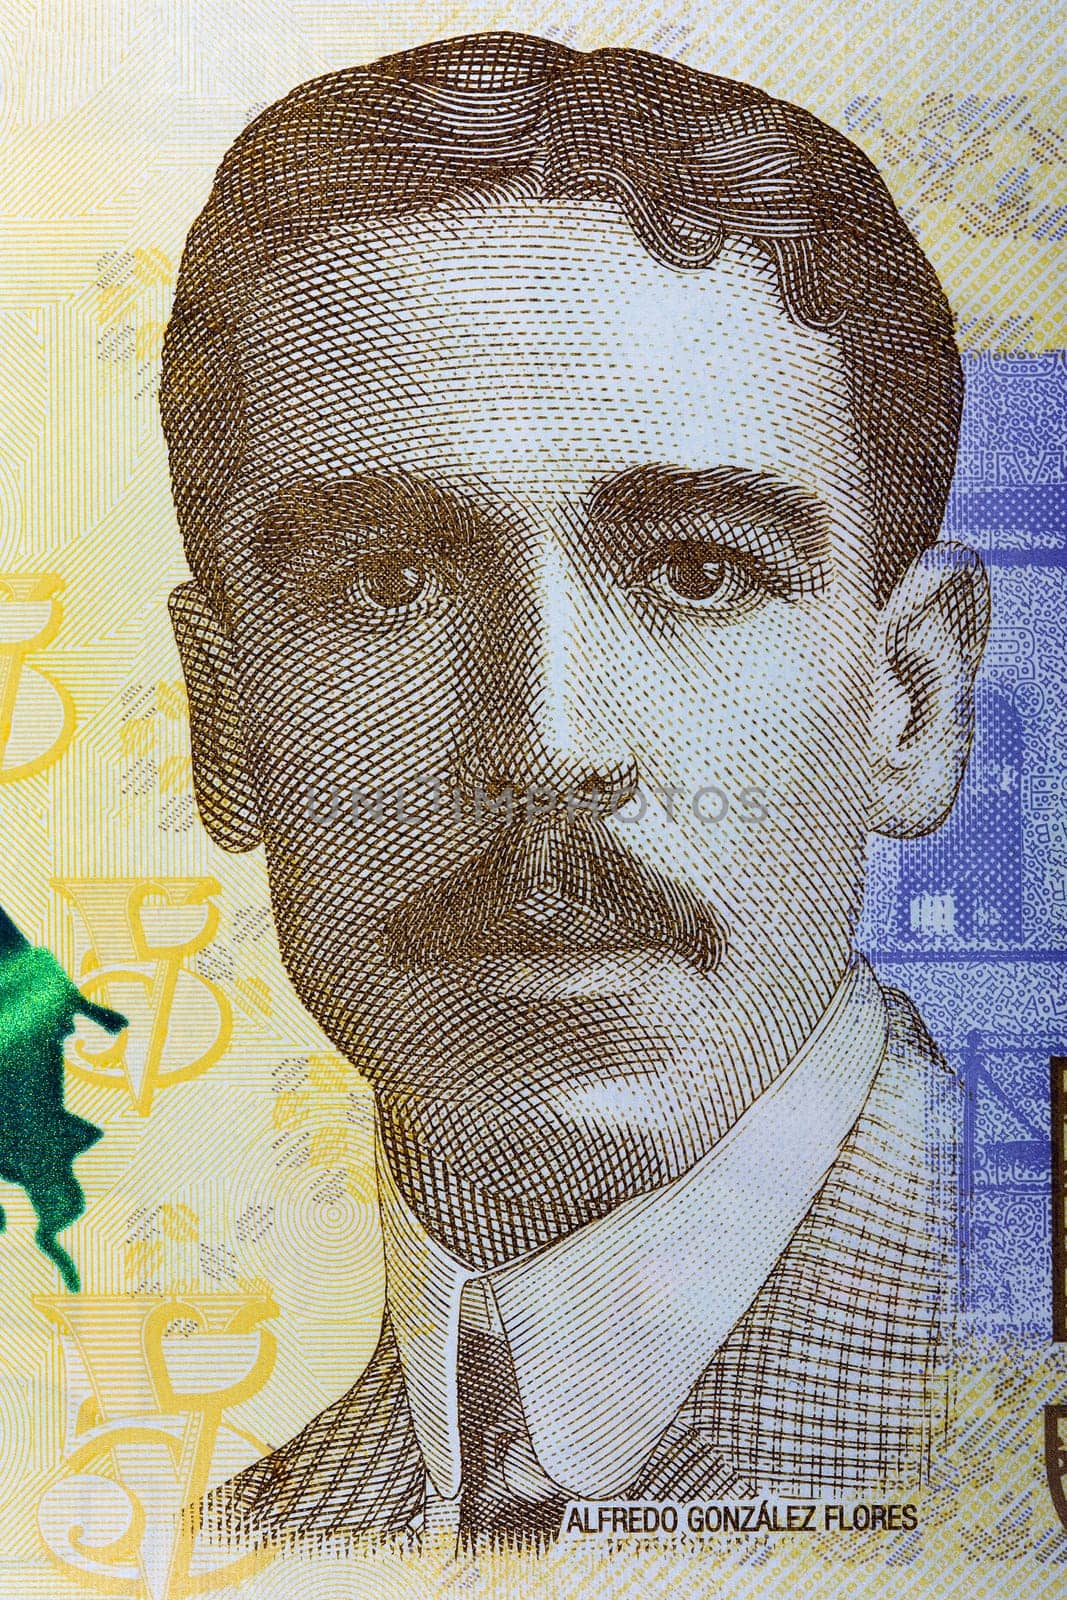 Alfredo Gonzalez Flores a portrait from Costa Rican money by johan10